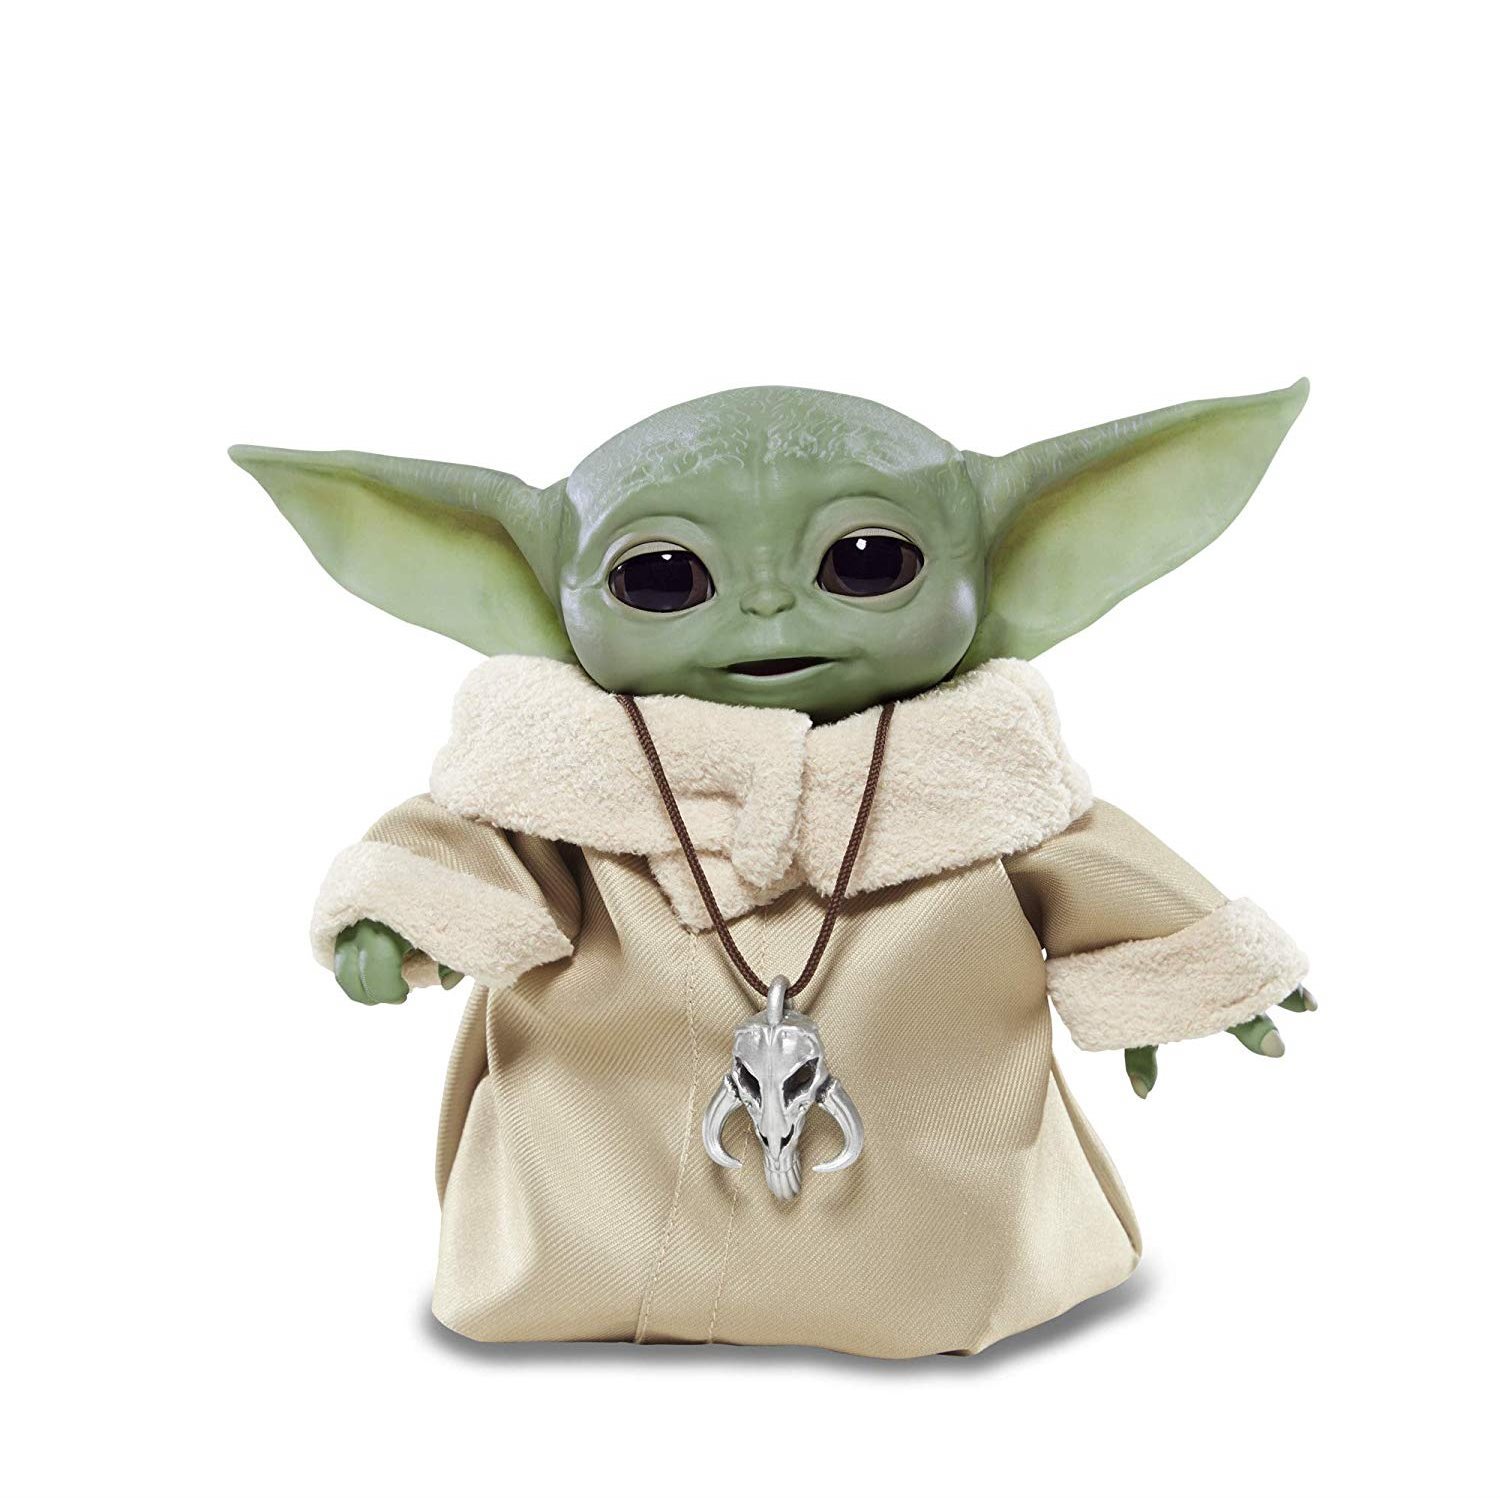 Star Wars Baby Yoda figura - Animatronic Force Friend